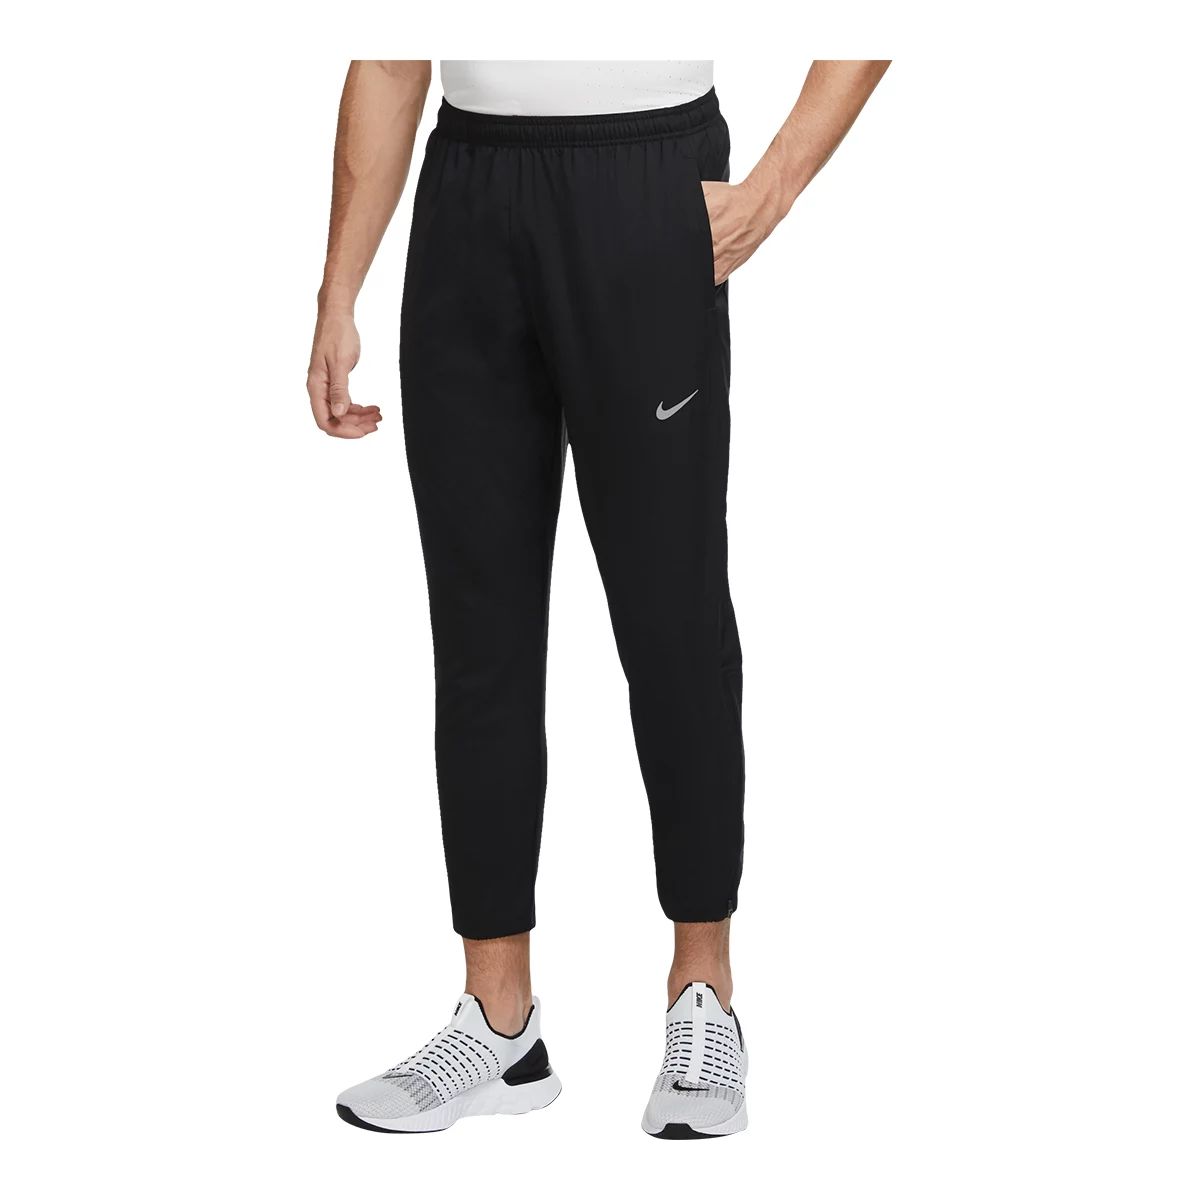 Image of Nike Men's Challenger Woven Pants